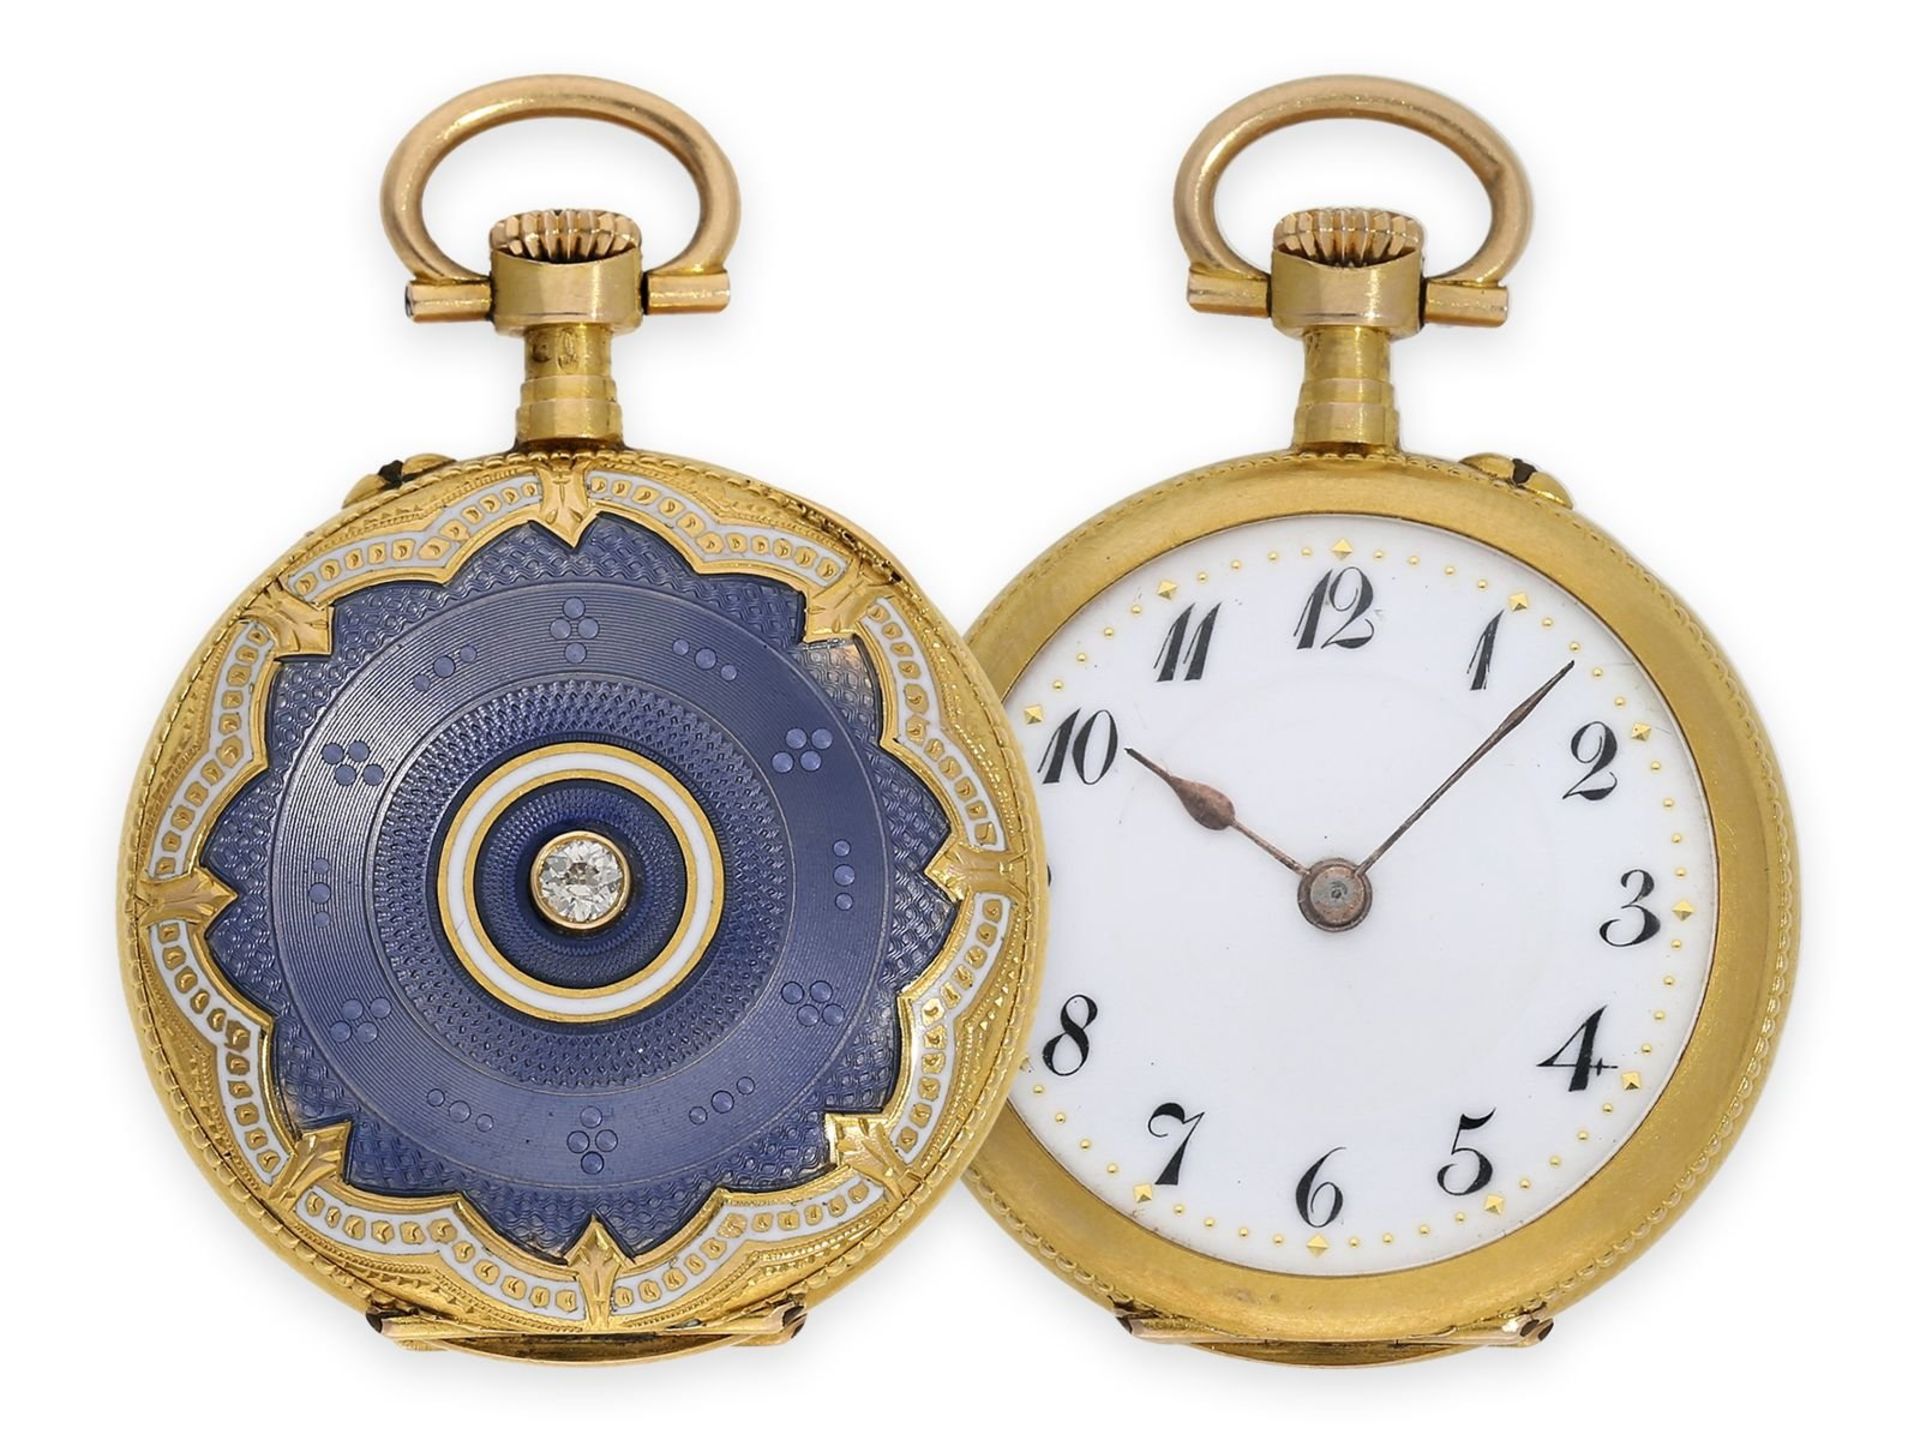 Pocket watch/ pendant watch: exquisite Art Nouveau gold/ enamel lady's watch with diamond setting, t